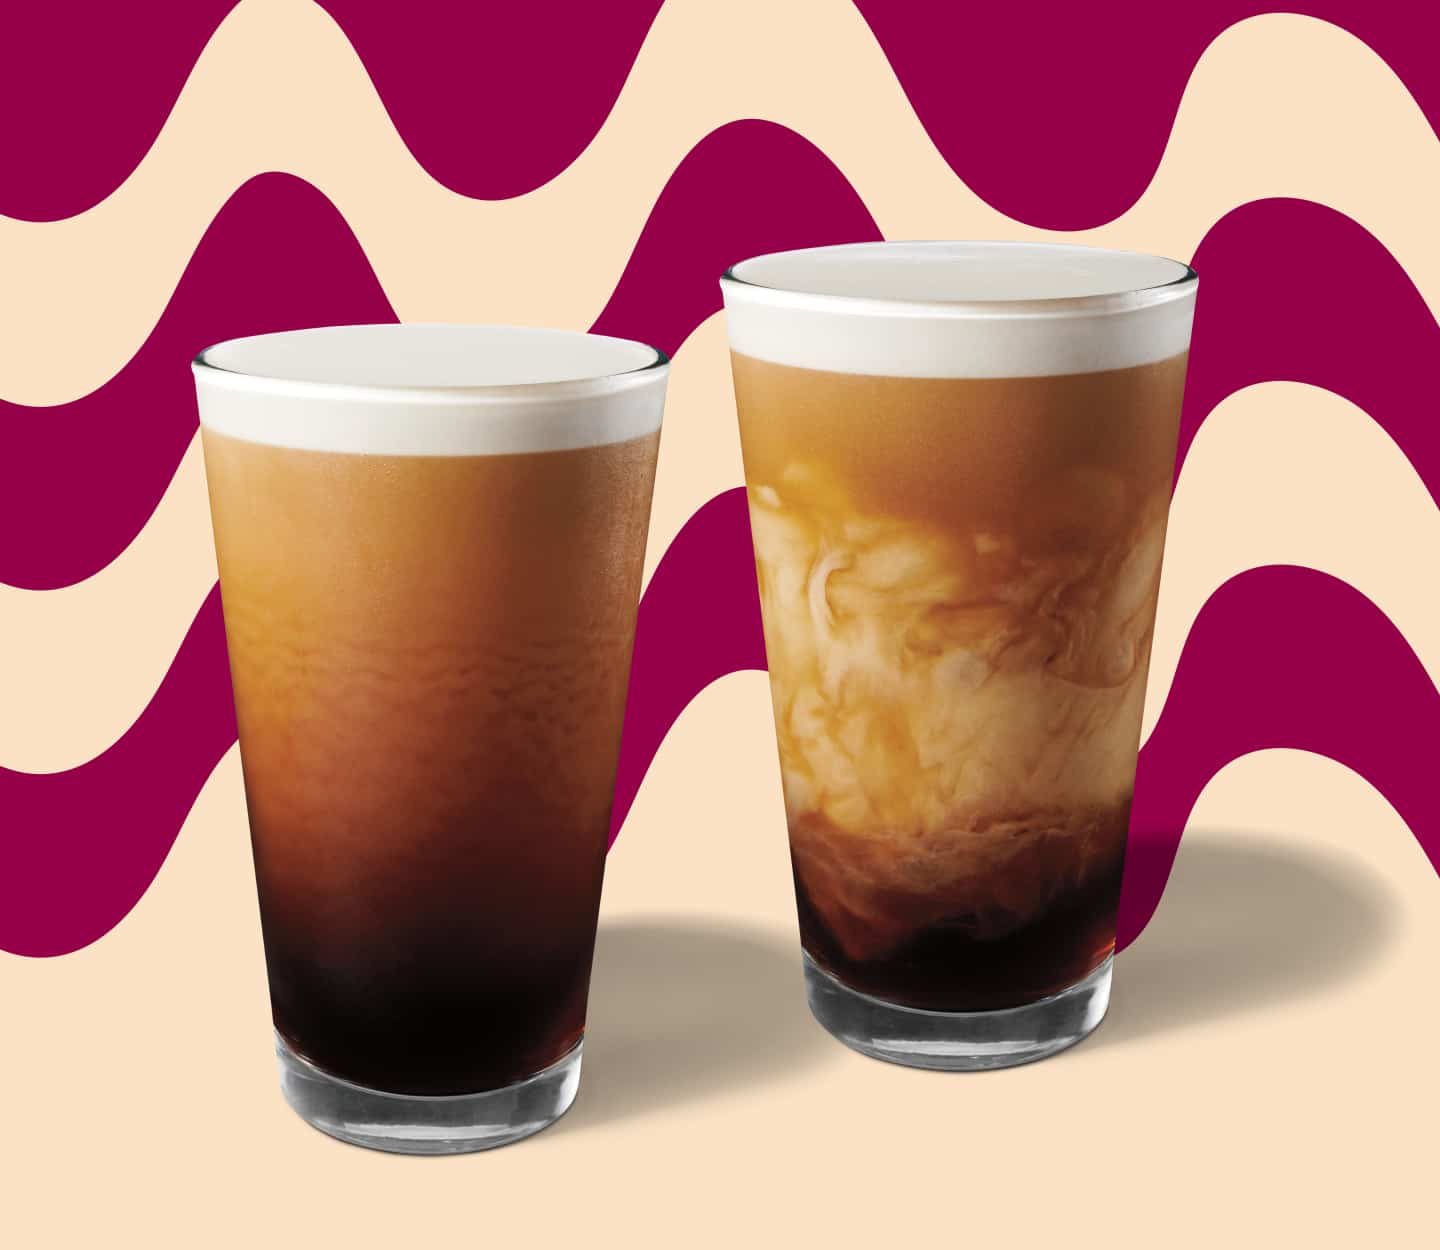 Two Nitro Cold Brew drinks served in glassware.